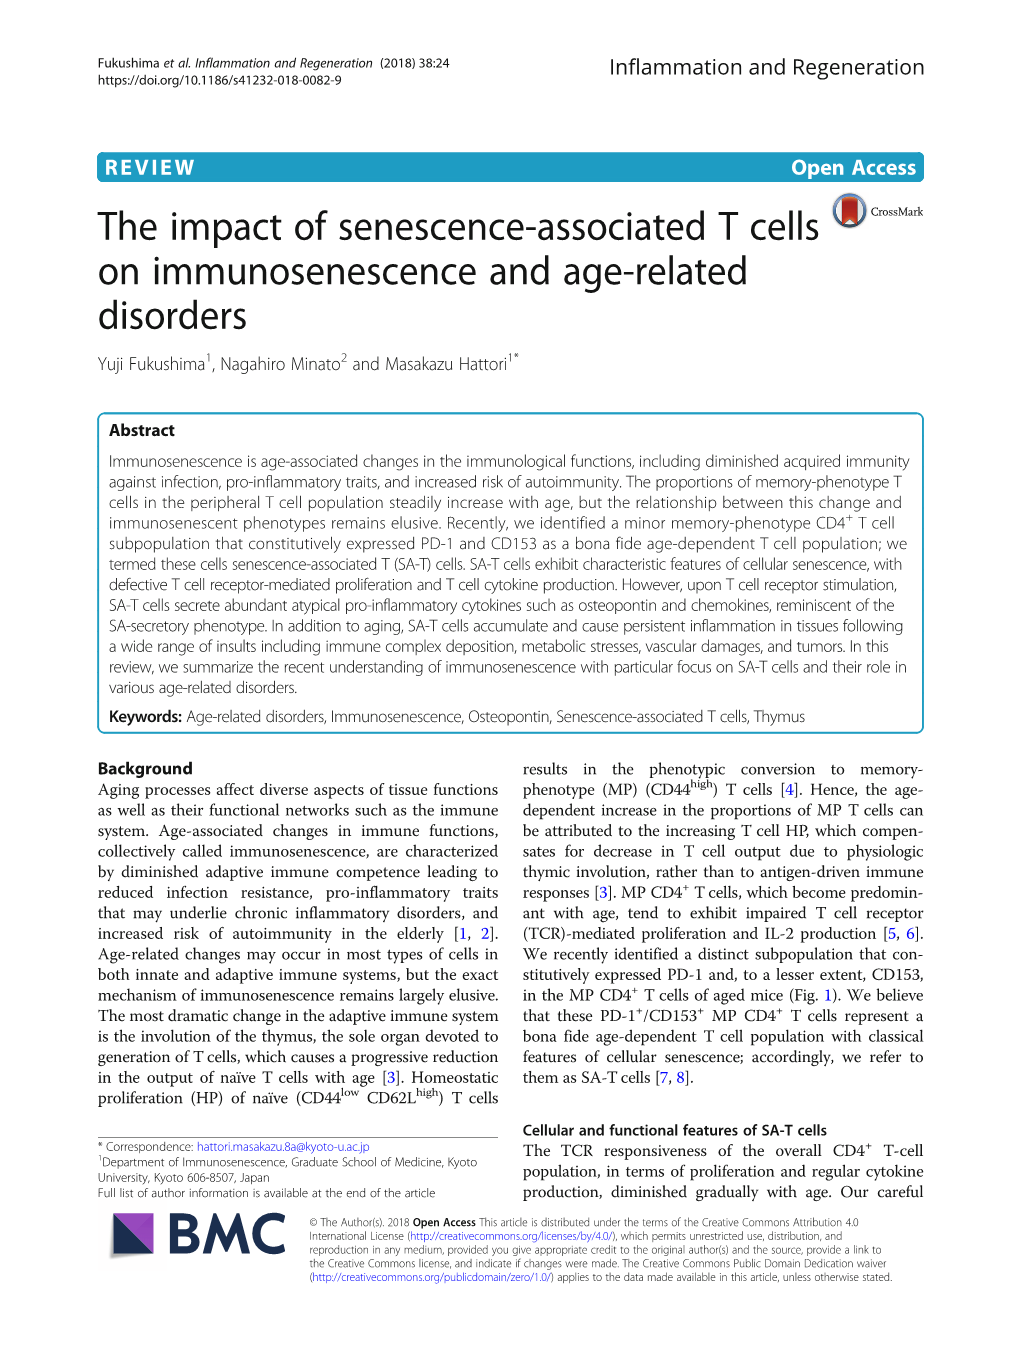 The Impact of Senescence-Associated T Cells on Immunosenescence and Age-Related Disorders Yuji Fukushima1, Nagahiro Minato2 and Masakazu Hattori1*